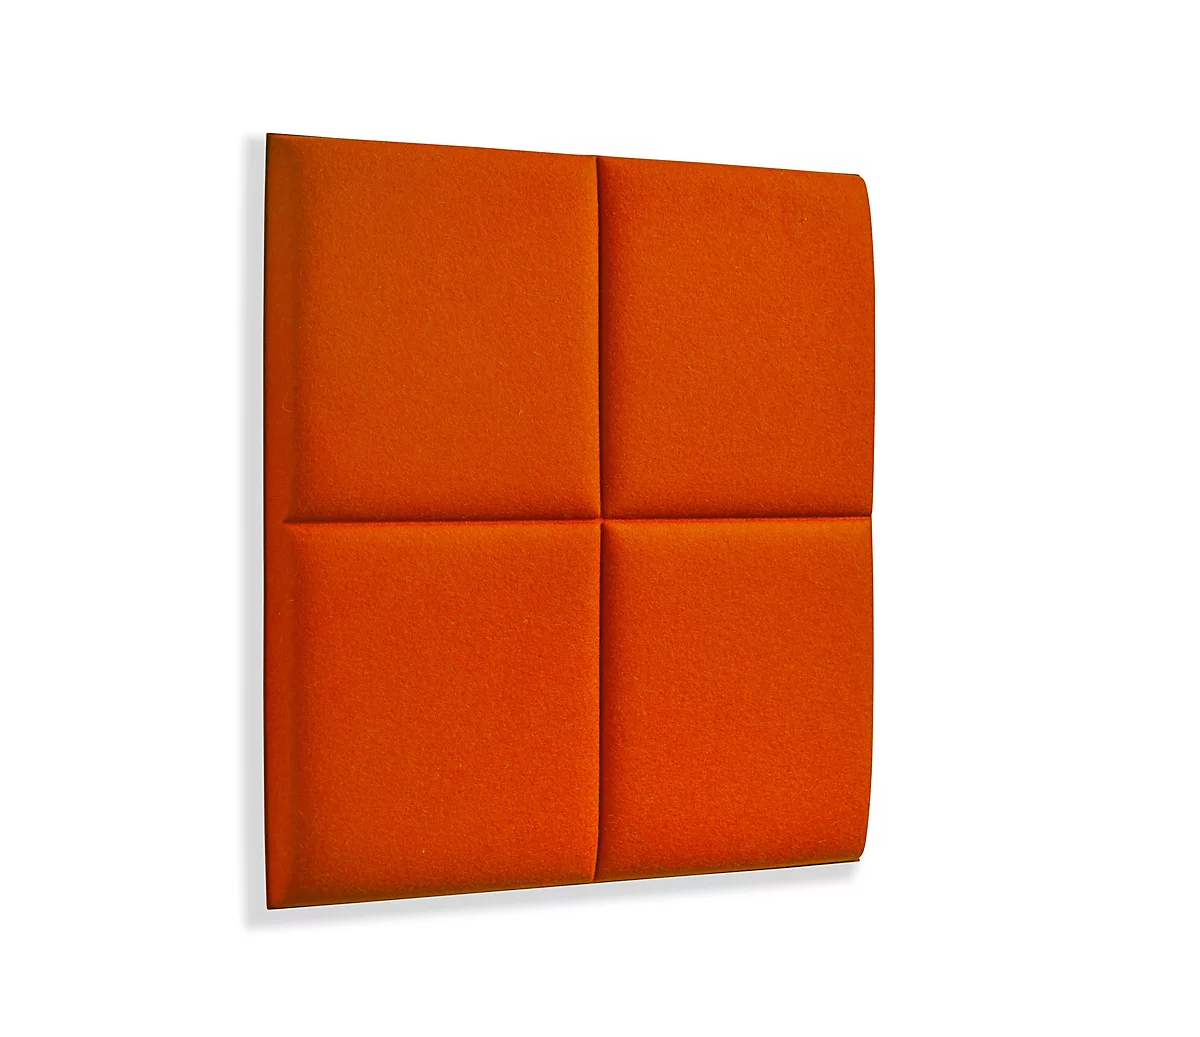 Wandpaneele m. Magnetbefestigung, B 604 x T 604 x H 47 mm, versch. 4 Square-Design, orange